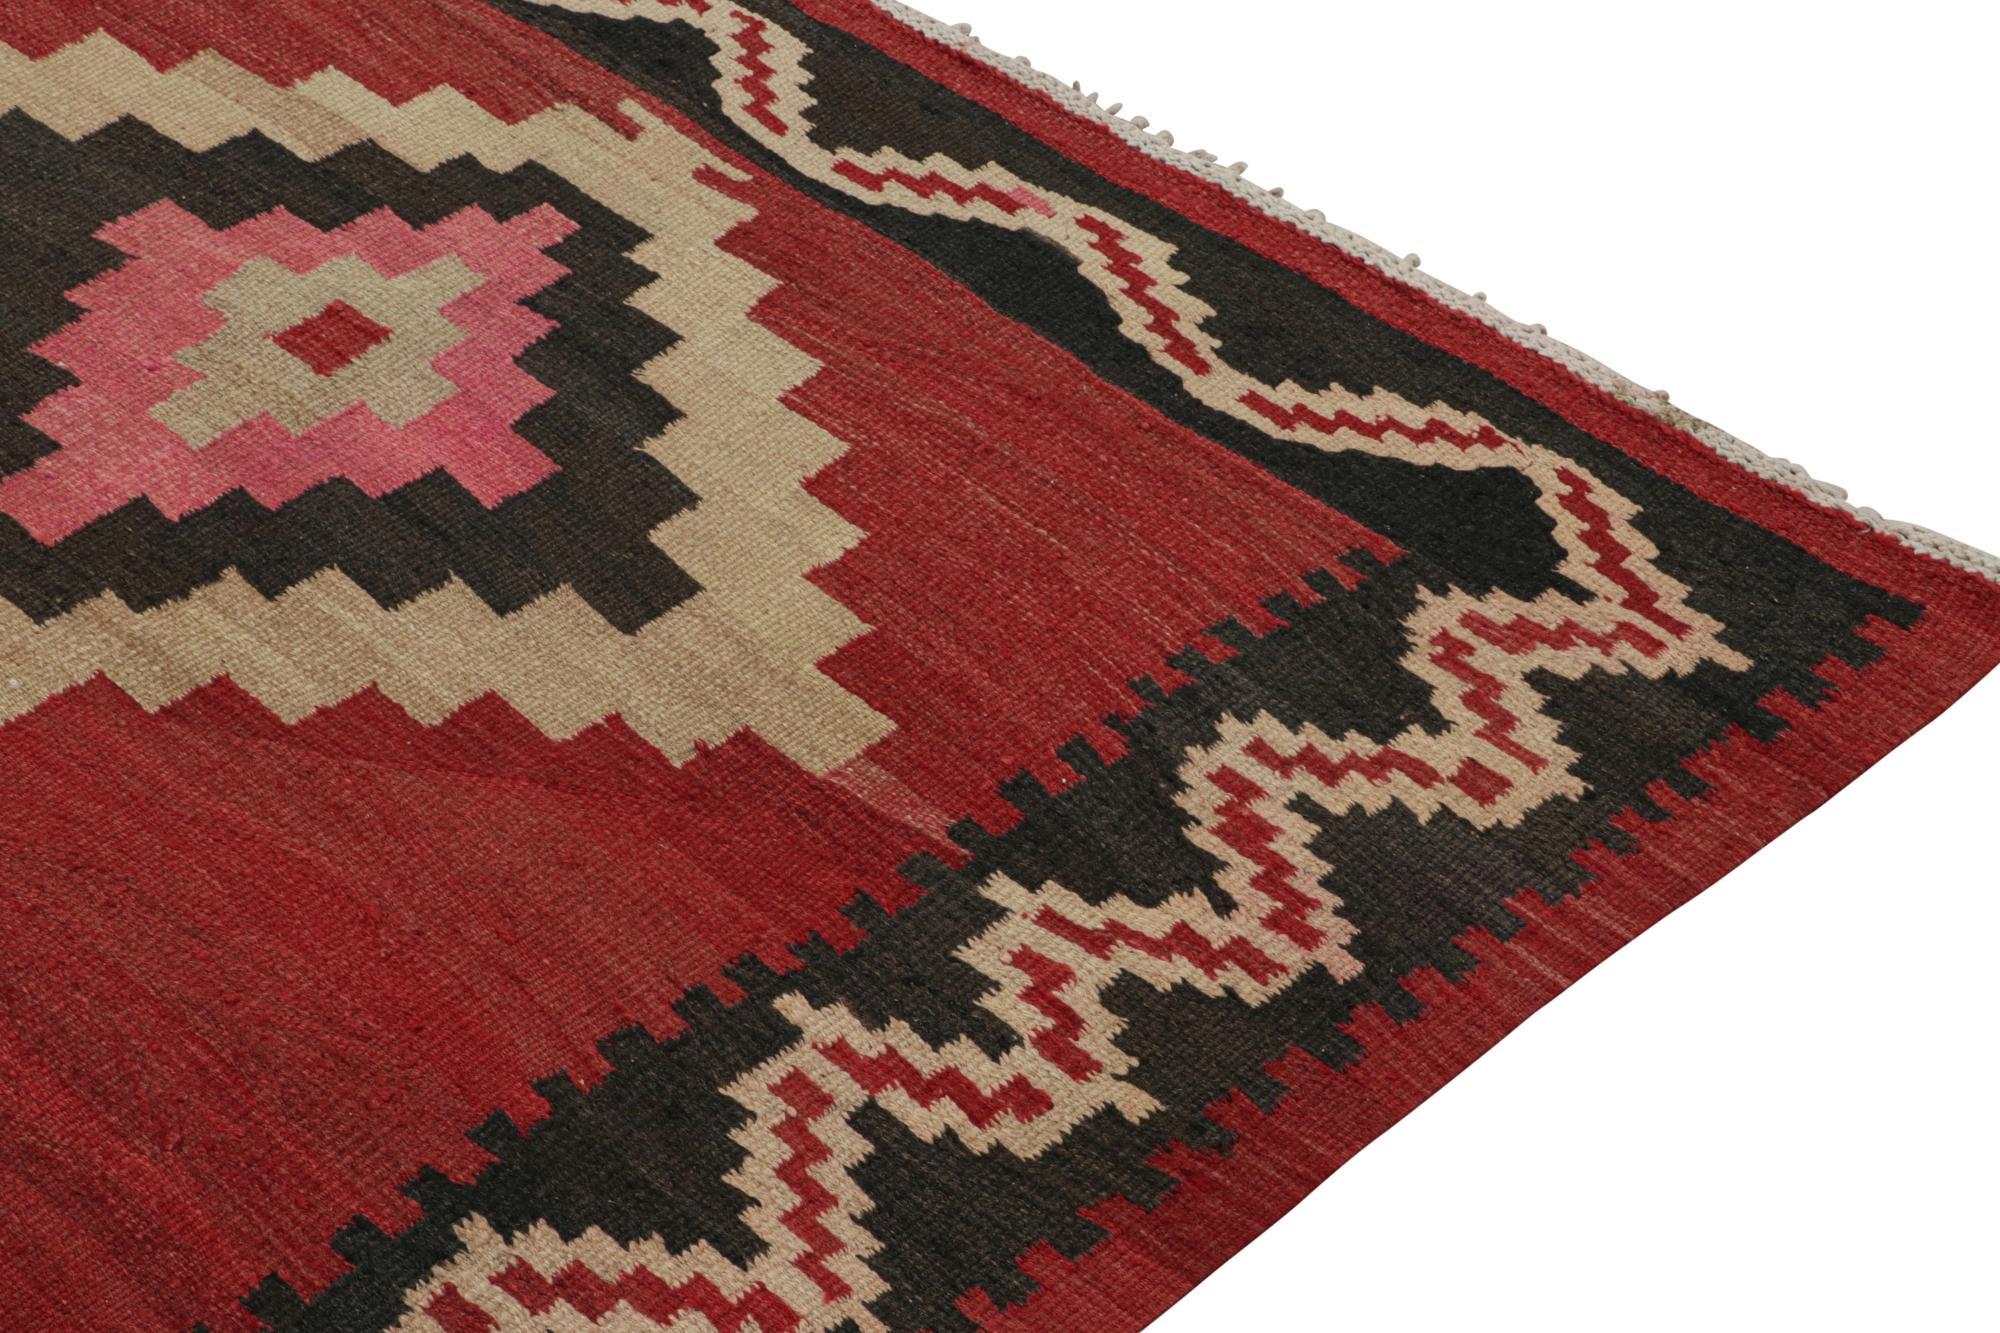 Mid-20th Century Vintage Shahsavan Persian Kilim in Red, Beige & Black Patterns by Rug & Kilim For Sale